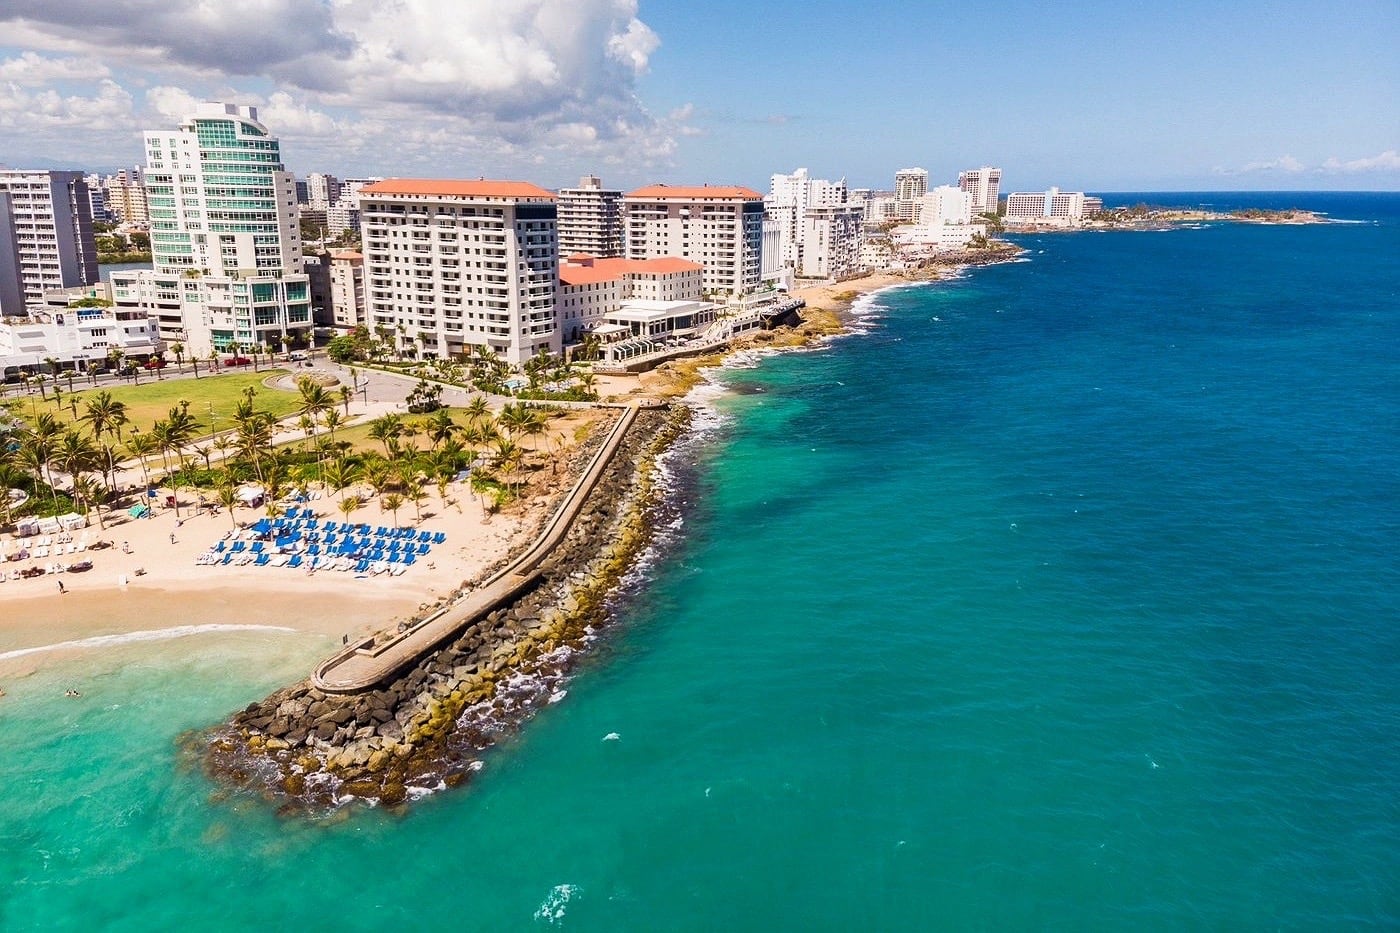 Puerto Rico resort near the water